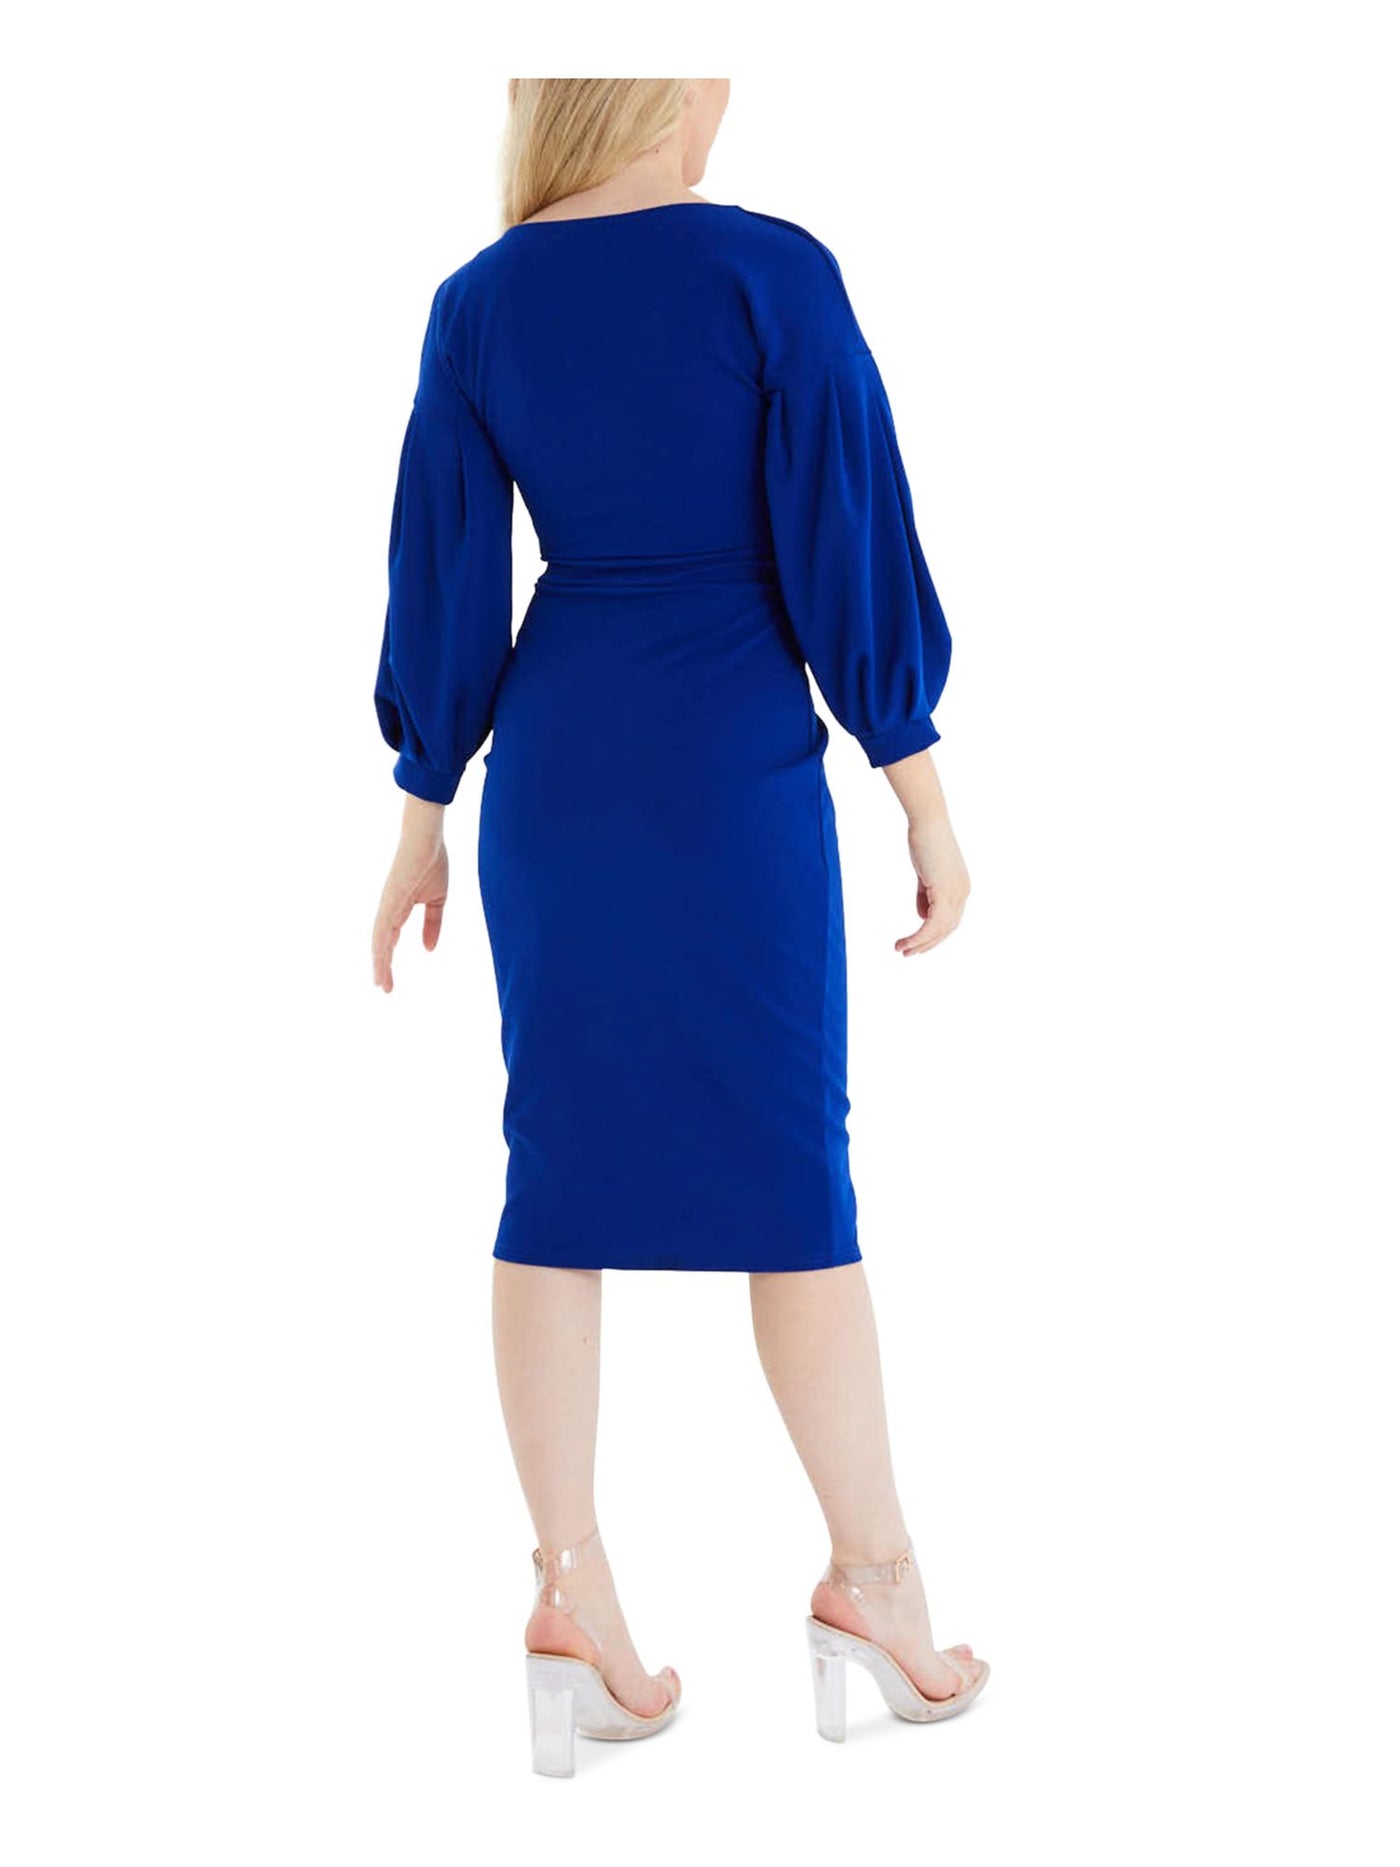 QUIZ Womens Blue Tie 3/4 Sleeve Surplice Neckline Below The Knee Cocktail Sheath Dress 8